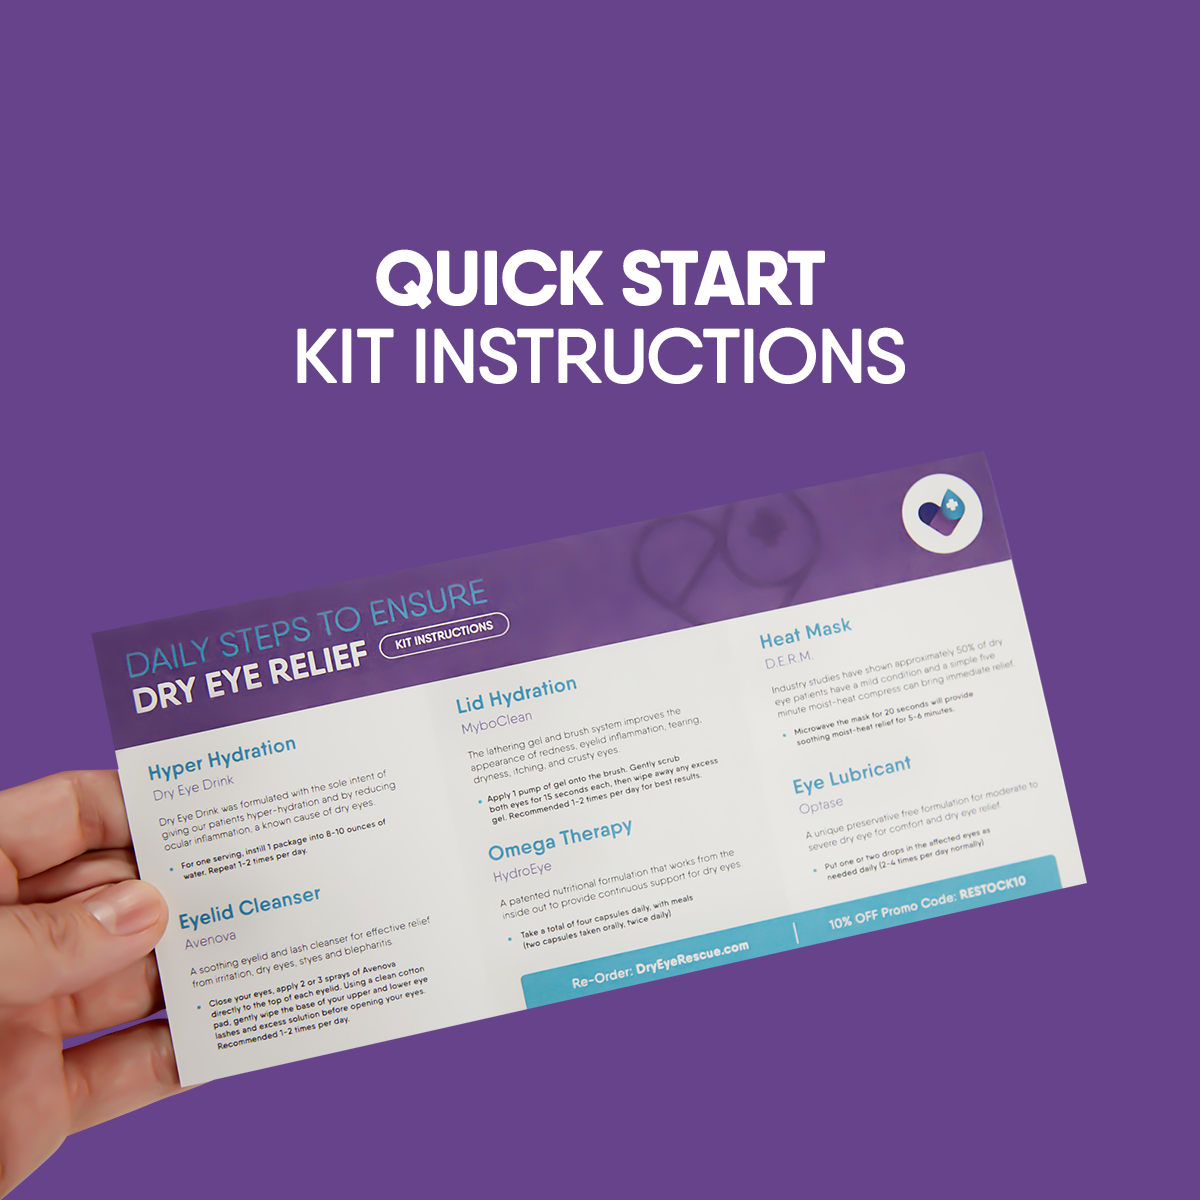 Dry Eye Relief Quick Start Kit (6-pack)